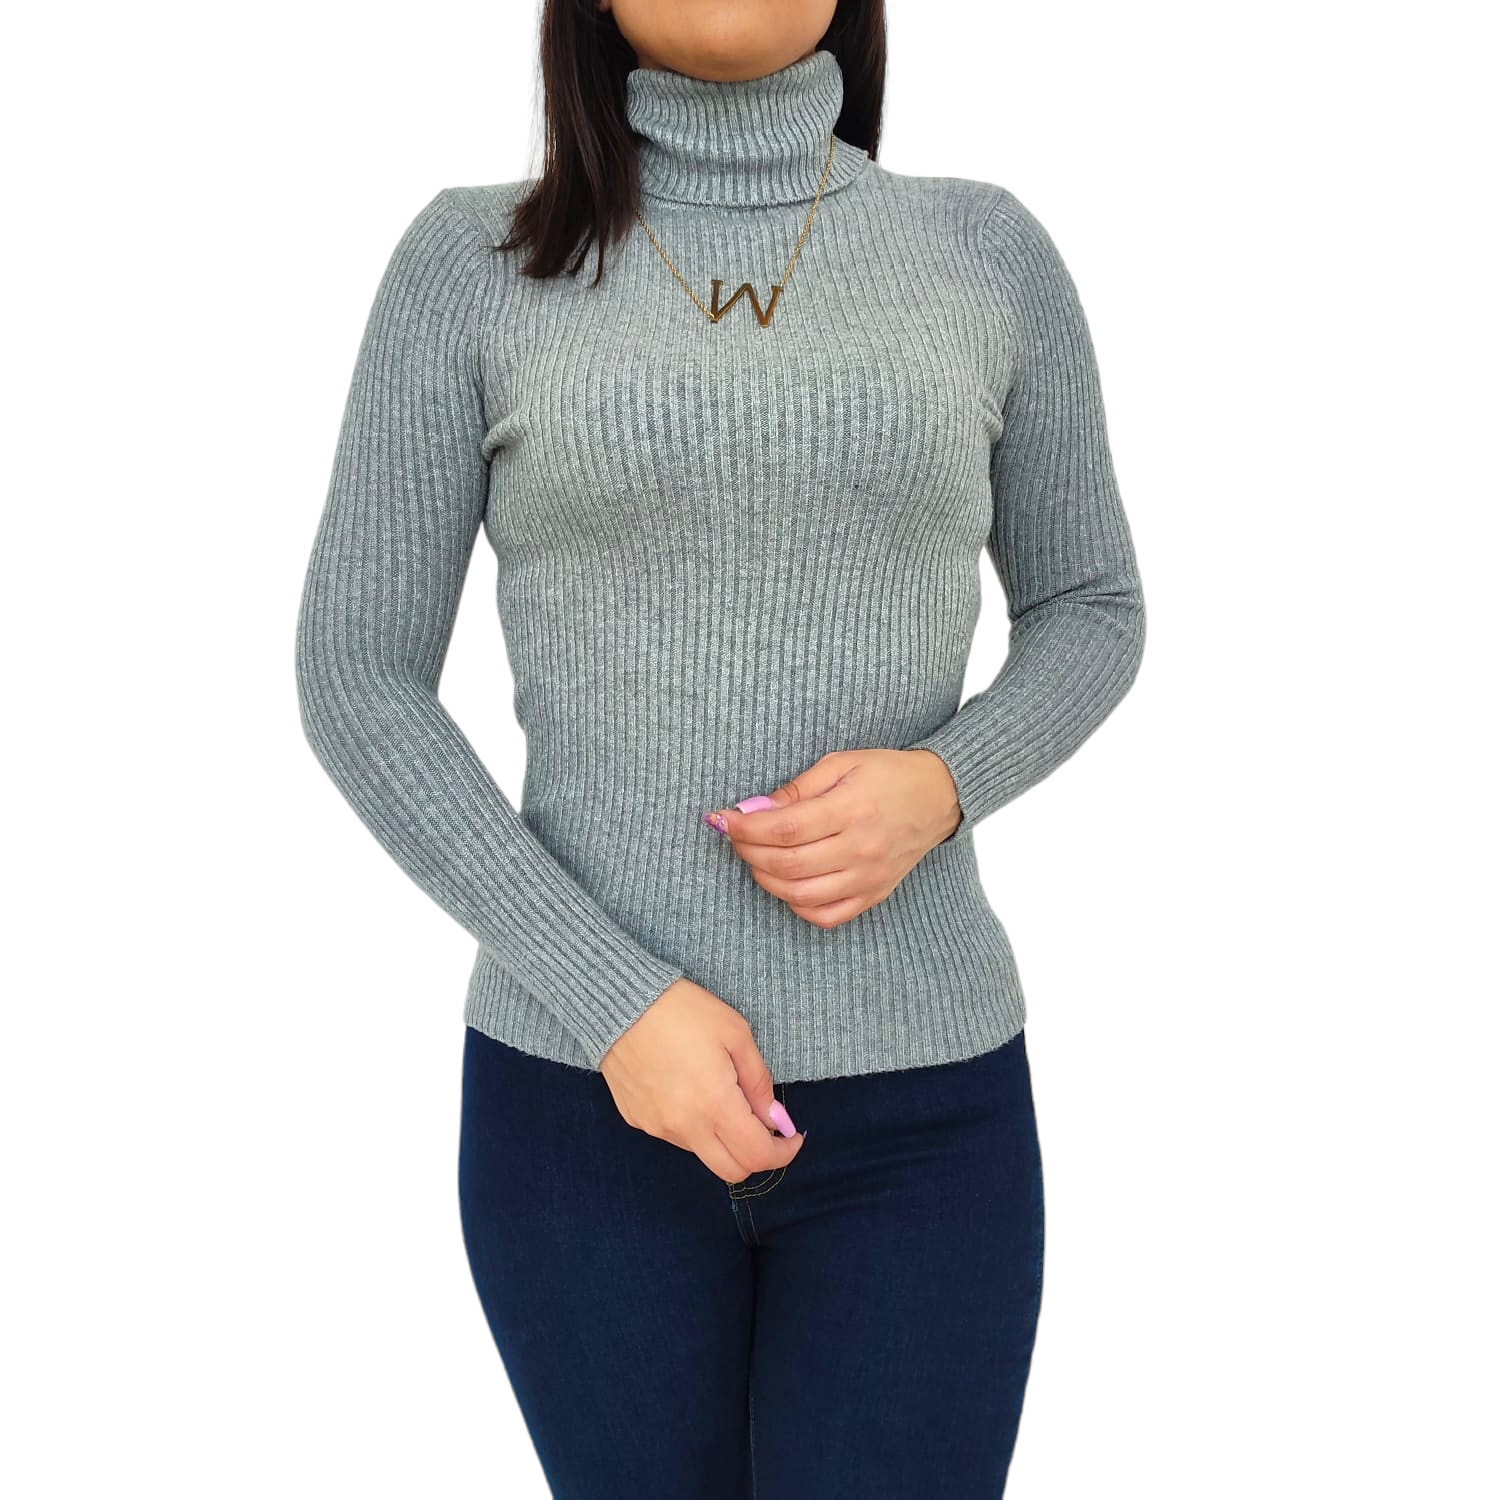 Sweater de mujer Alegra